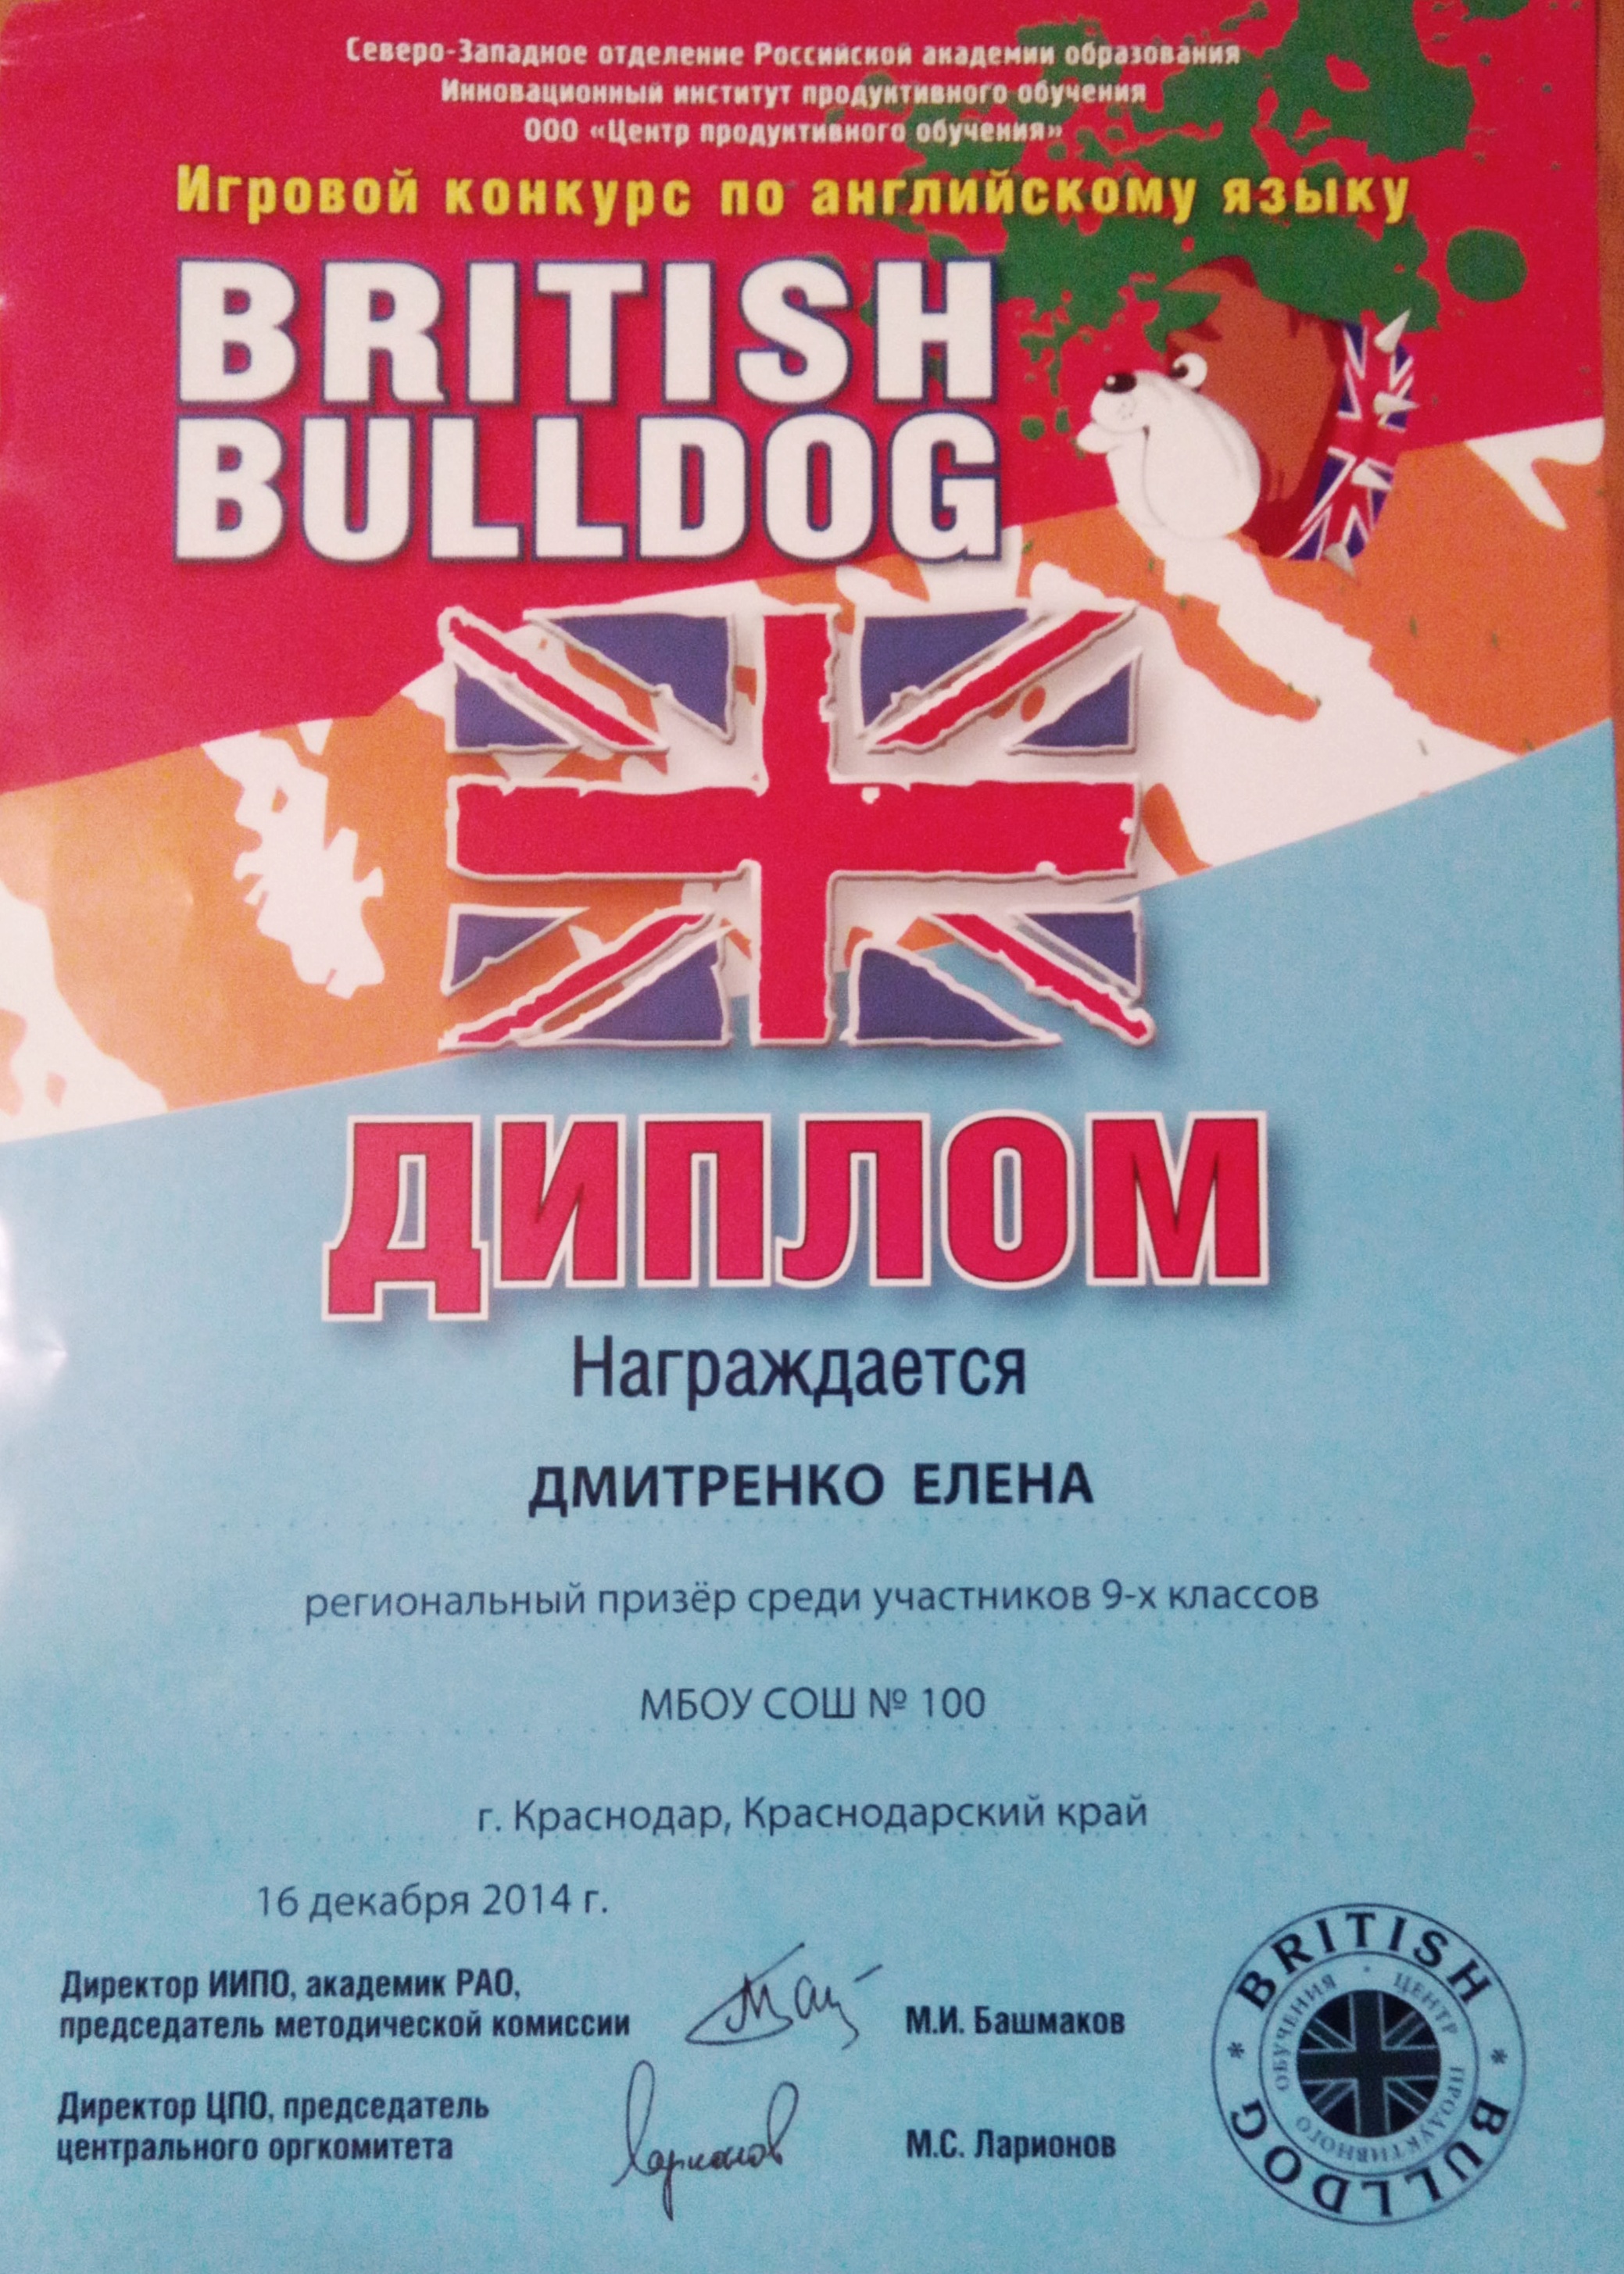 Бульдог конкурс по английскому языку. Британский бульдог грамота. British Bulldog грамота.